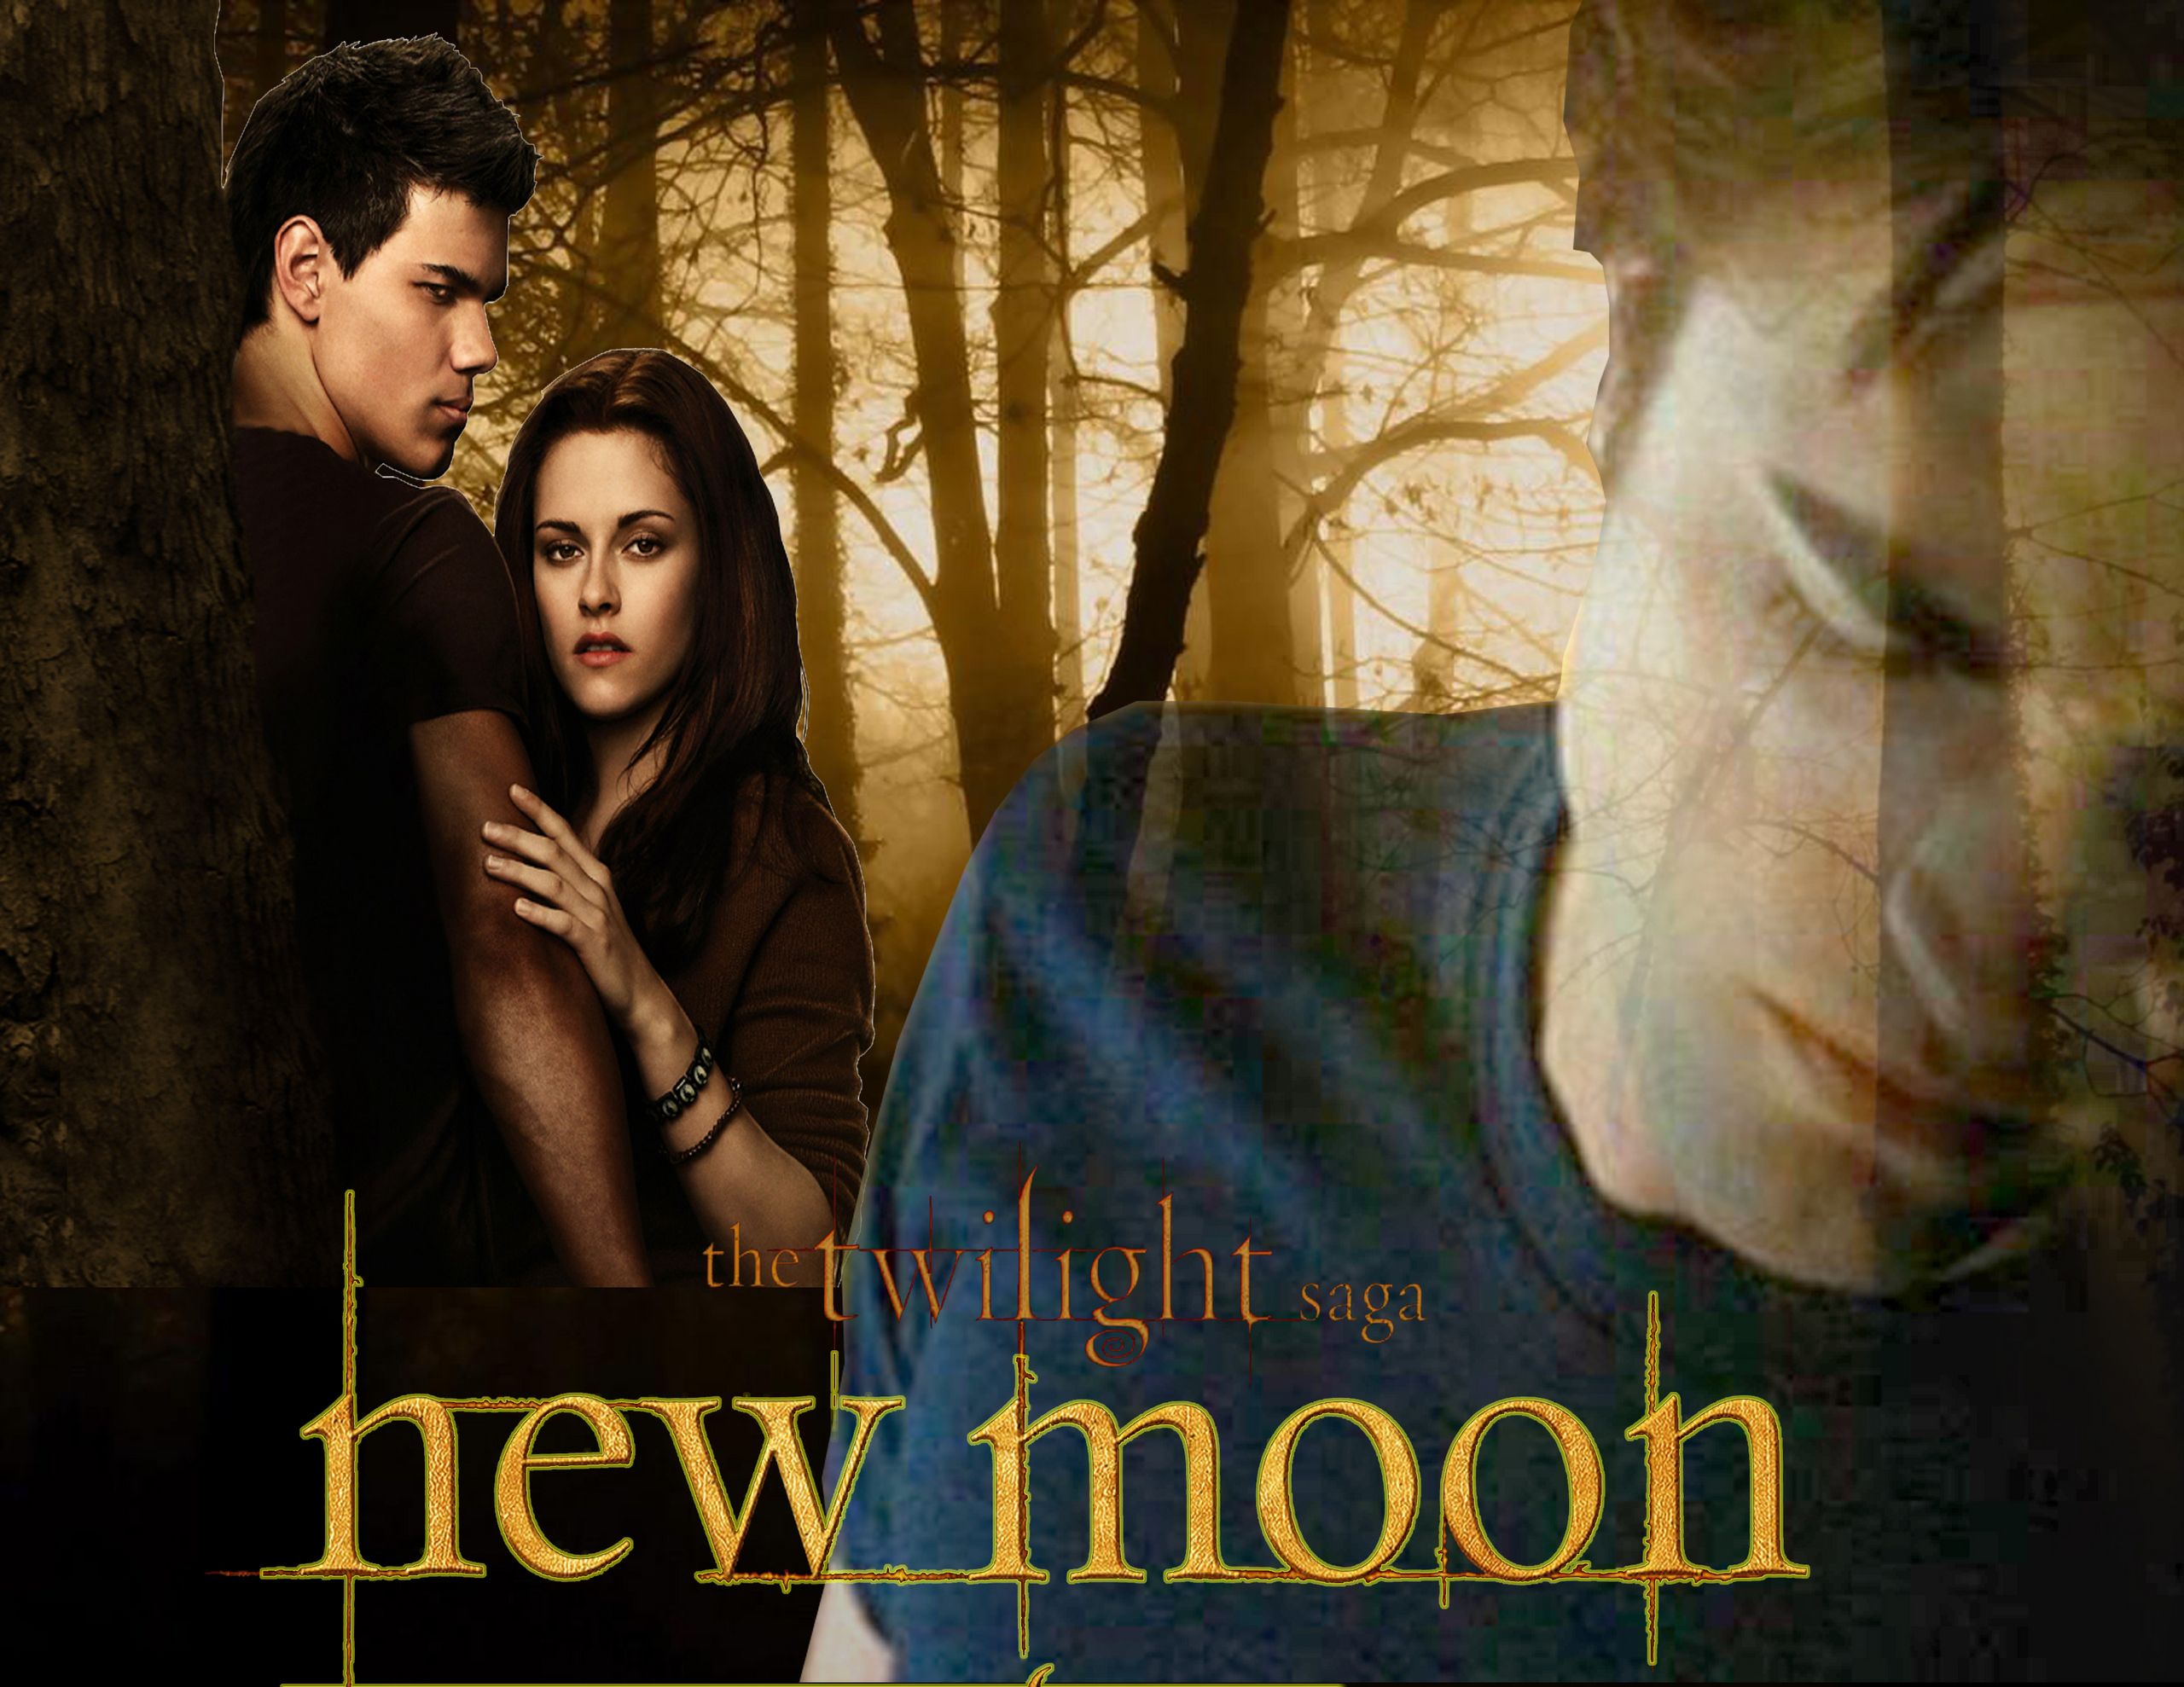 The twilight saga new moon Wallpaper